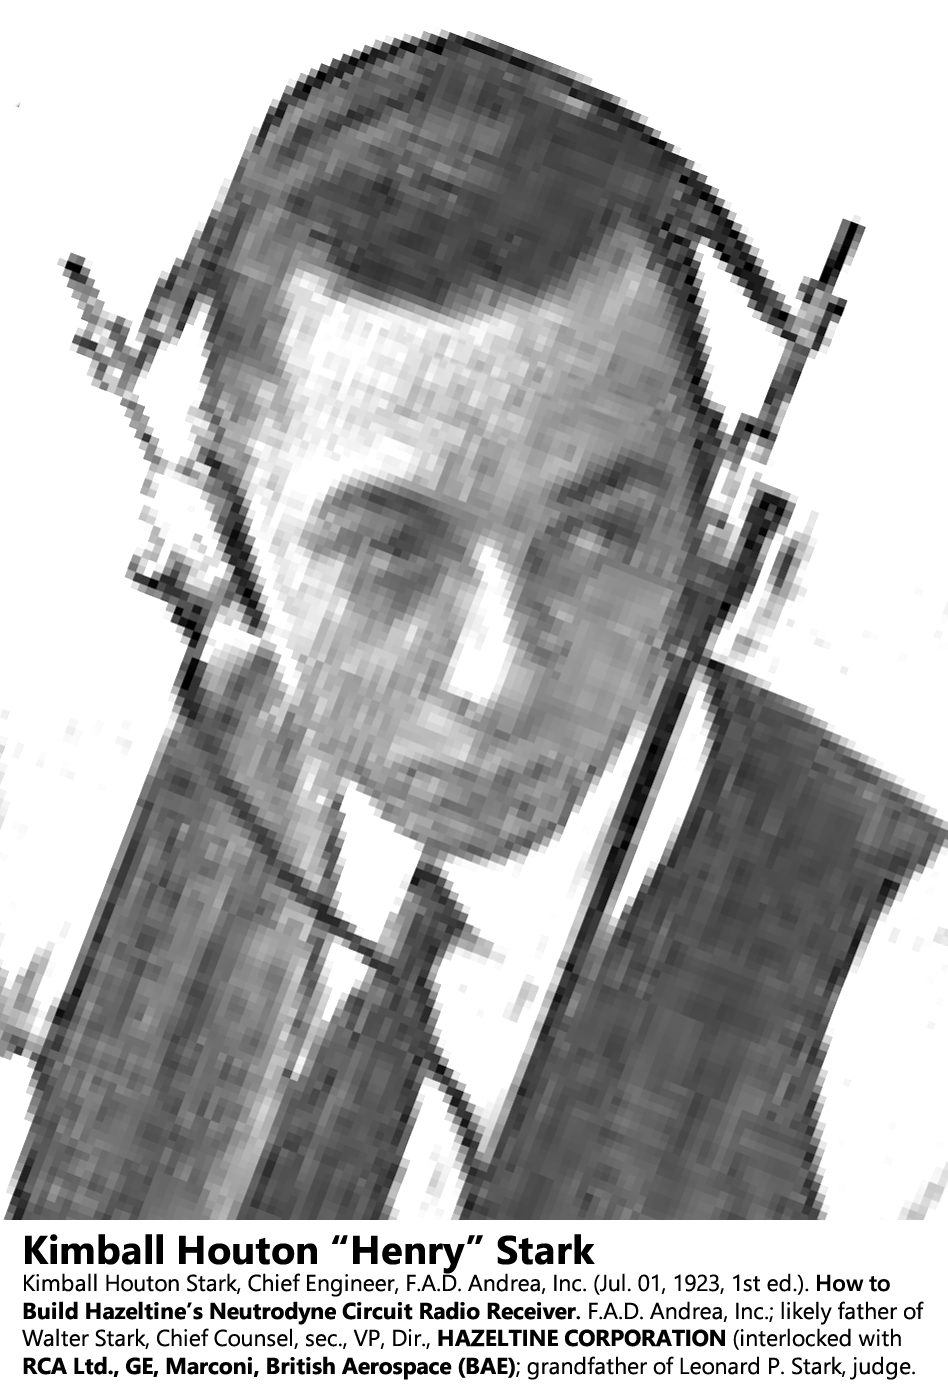 Kimball Houton "Henry" Stark. Chief Engineer, F.A.D. Andrea, Inc. (Jul. 01, 1923, 1st ed.). How to Build Hazeltine’s Neutrodyne Circuit Radio Receiver. F.A.D. Andrea, Inc.; likely father of Walter Stark, Chief Counsel, sec., VP, Dir., HAZELTINE CORPORATION (interlocked with RCA Ltd., GE, Marconi, British Aerospace (BAE); grandfather of Leonard P. Stark, judge.